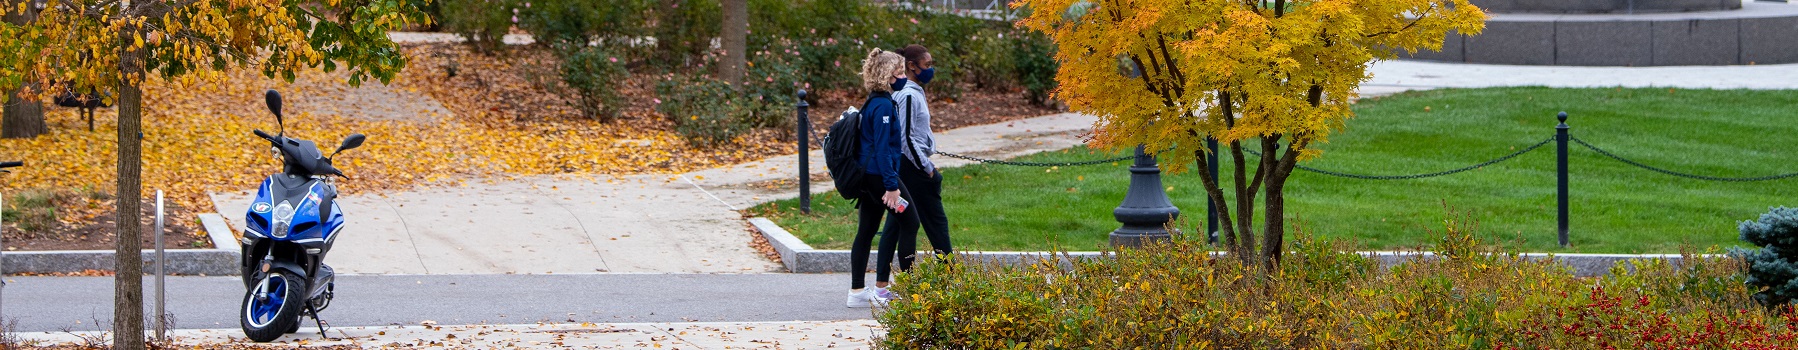 students walking